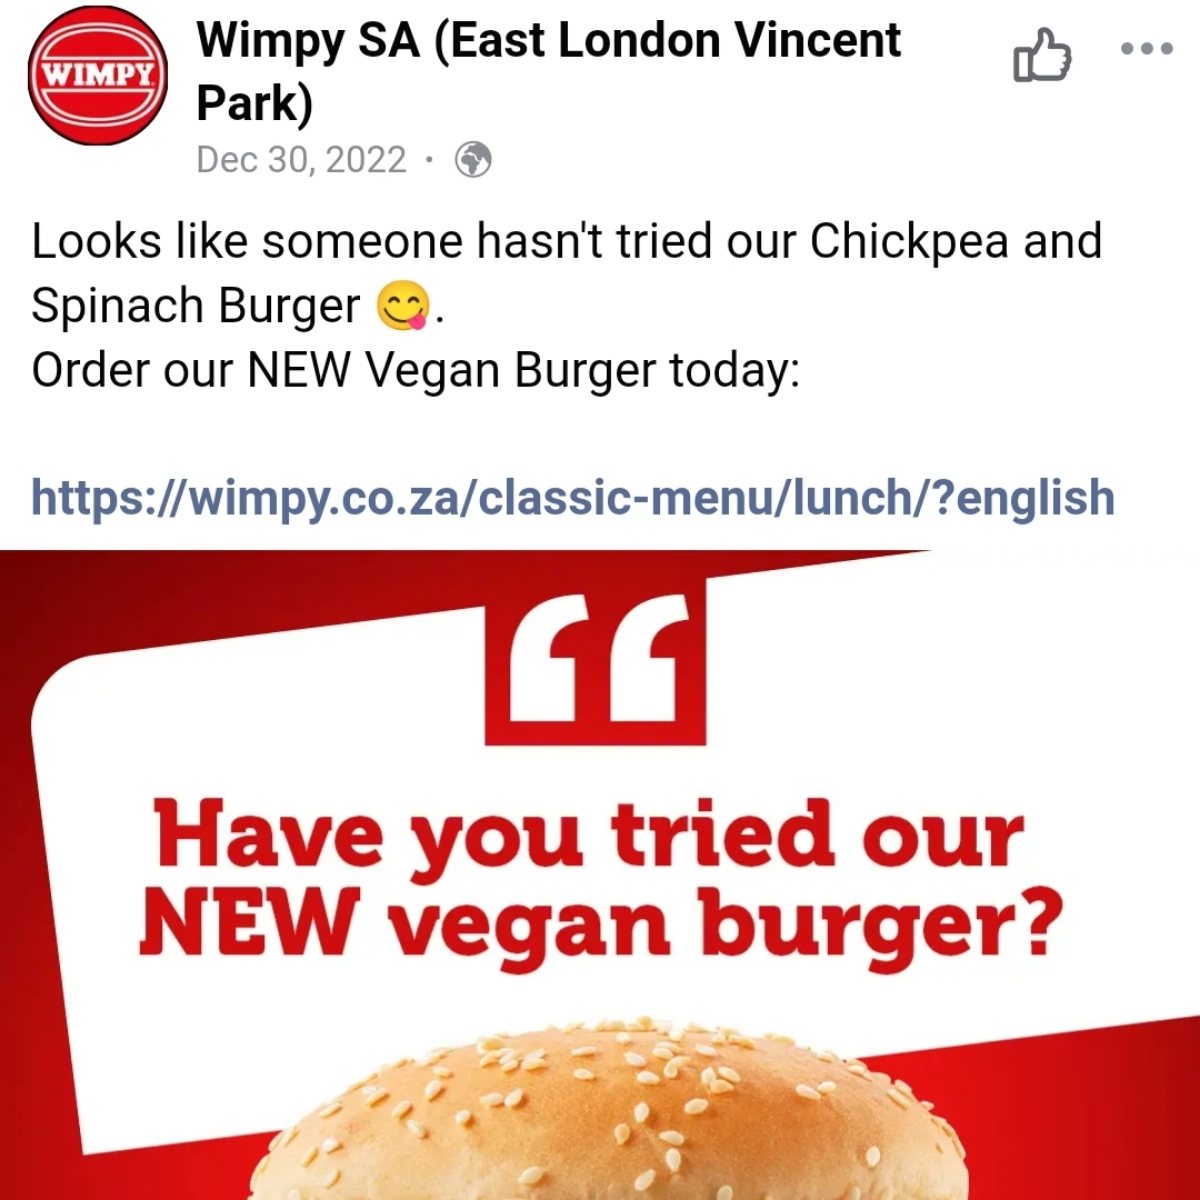 Wimpy Vegan Options, What's Vegan at Wimpy?